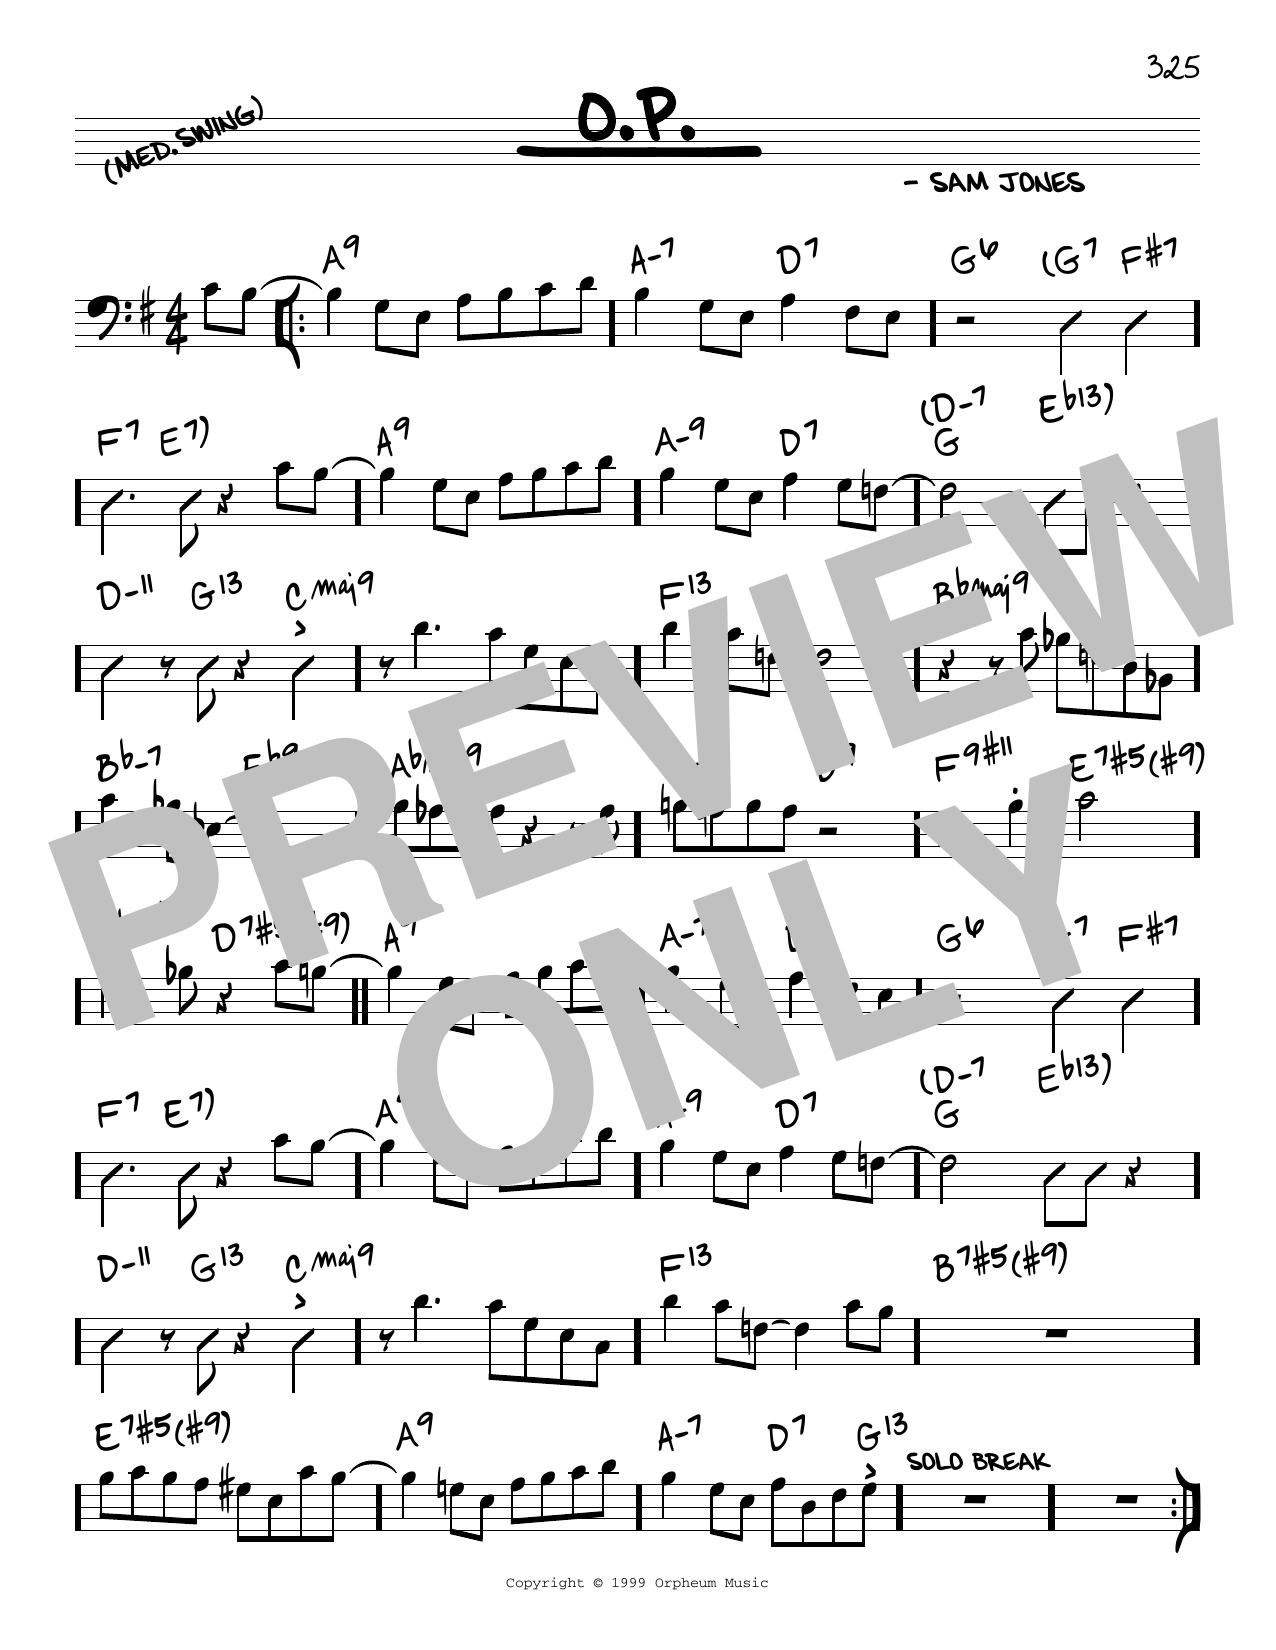 Sam Jones O.P. Sheet Music Notes & Chords for Real Book – Melody & Chords - Download or Print PDF